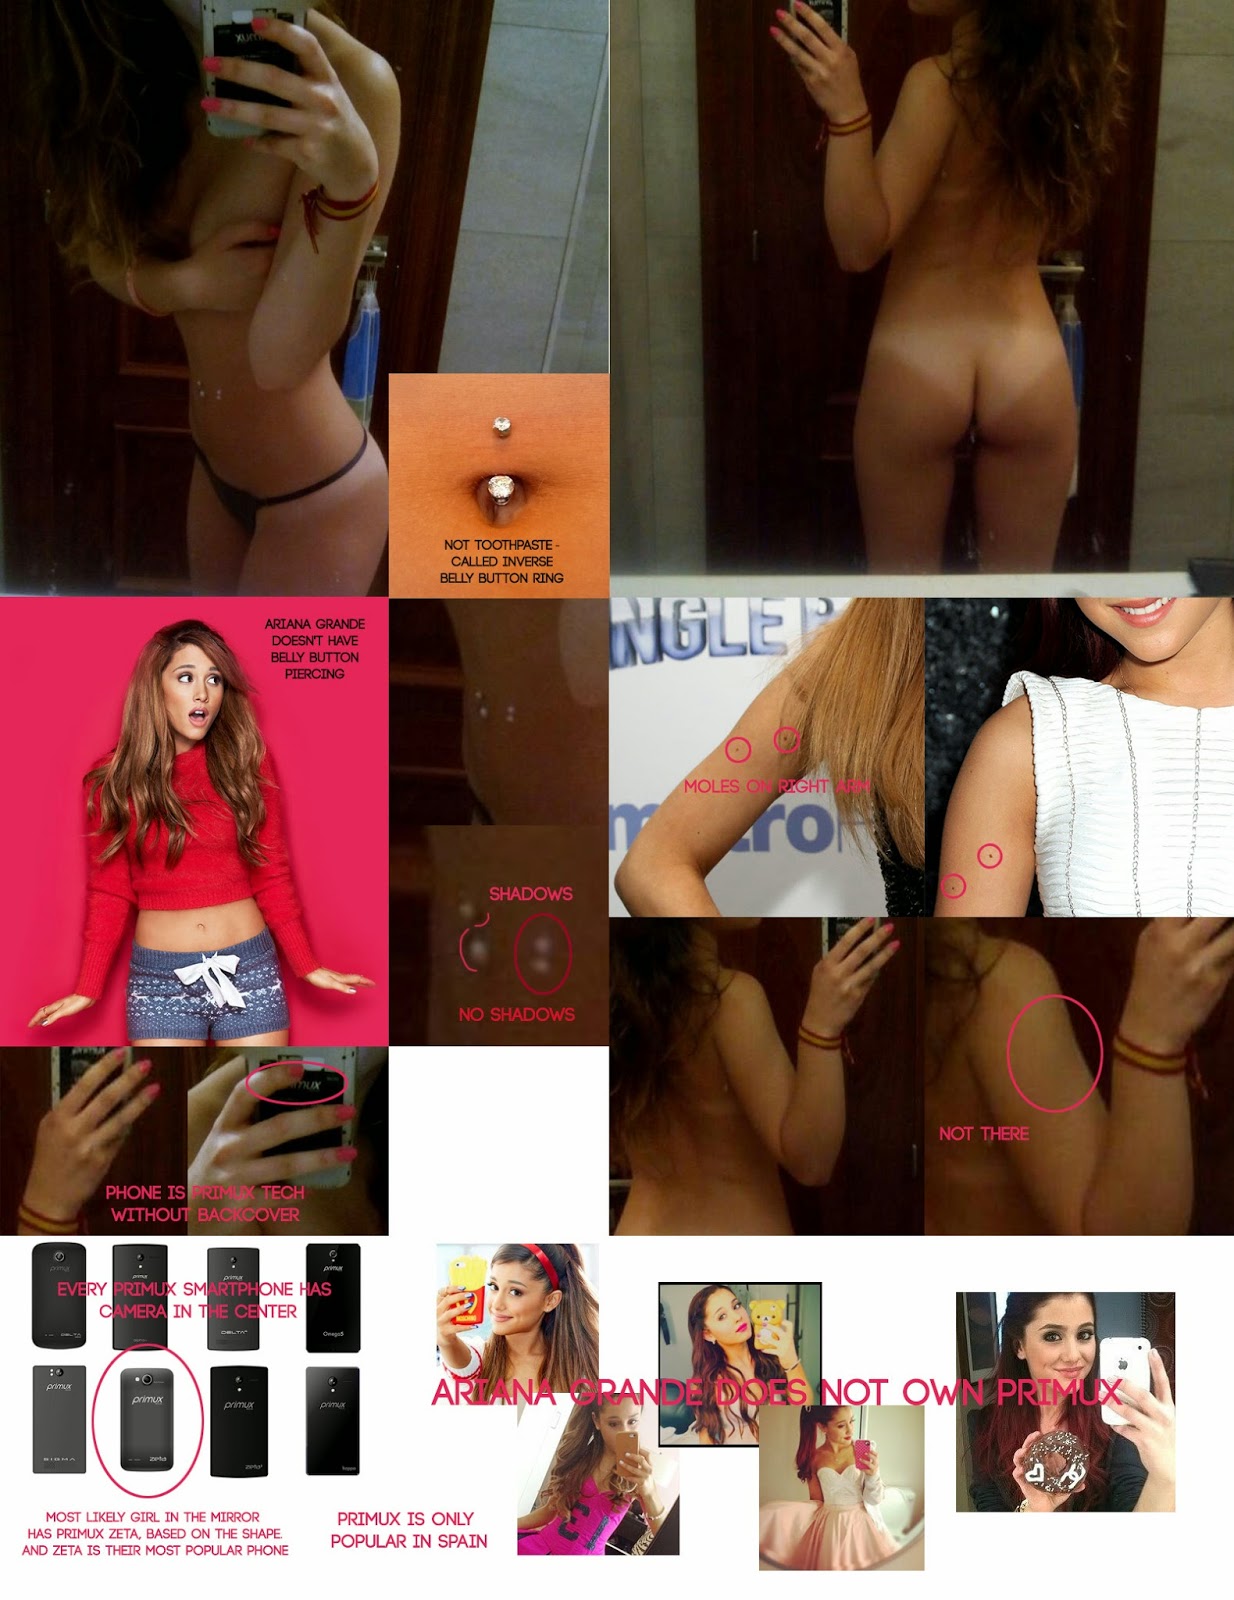 Ariana grande nudes 4chan